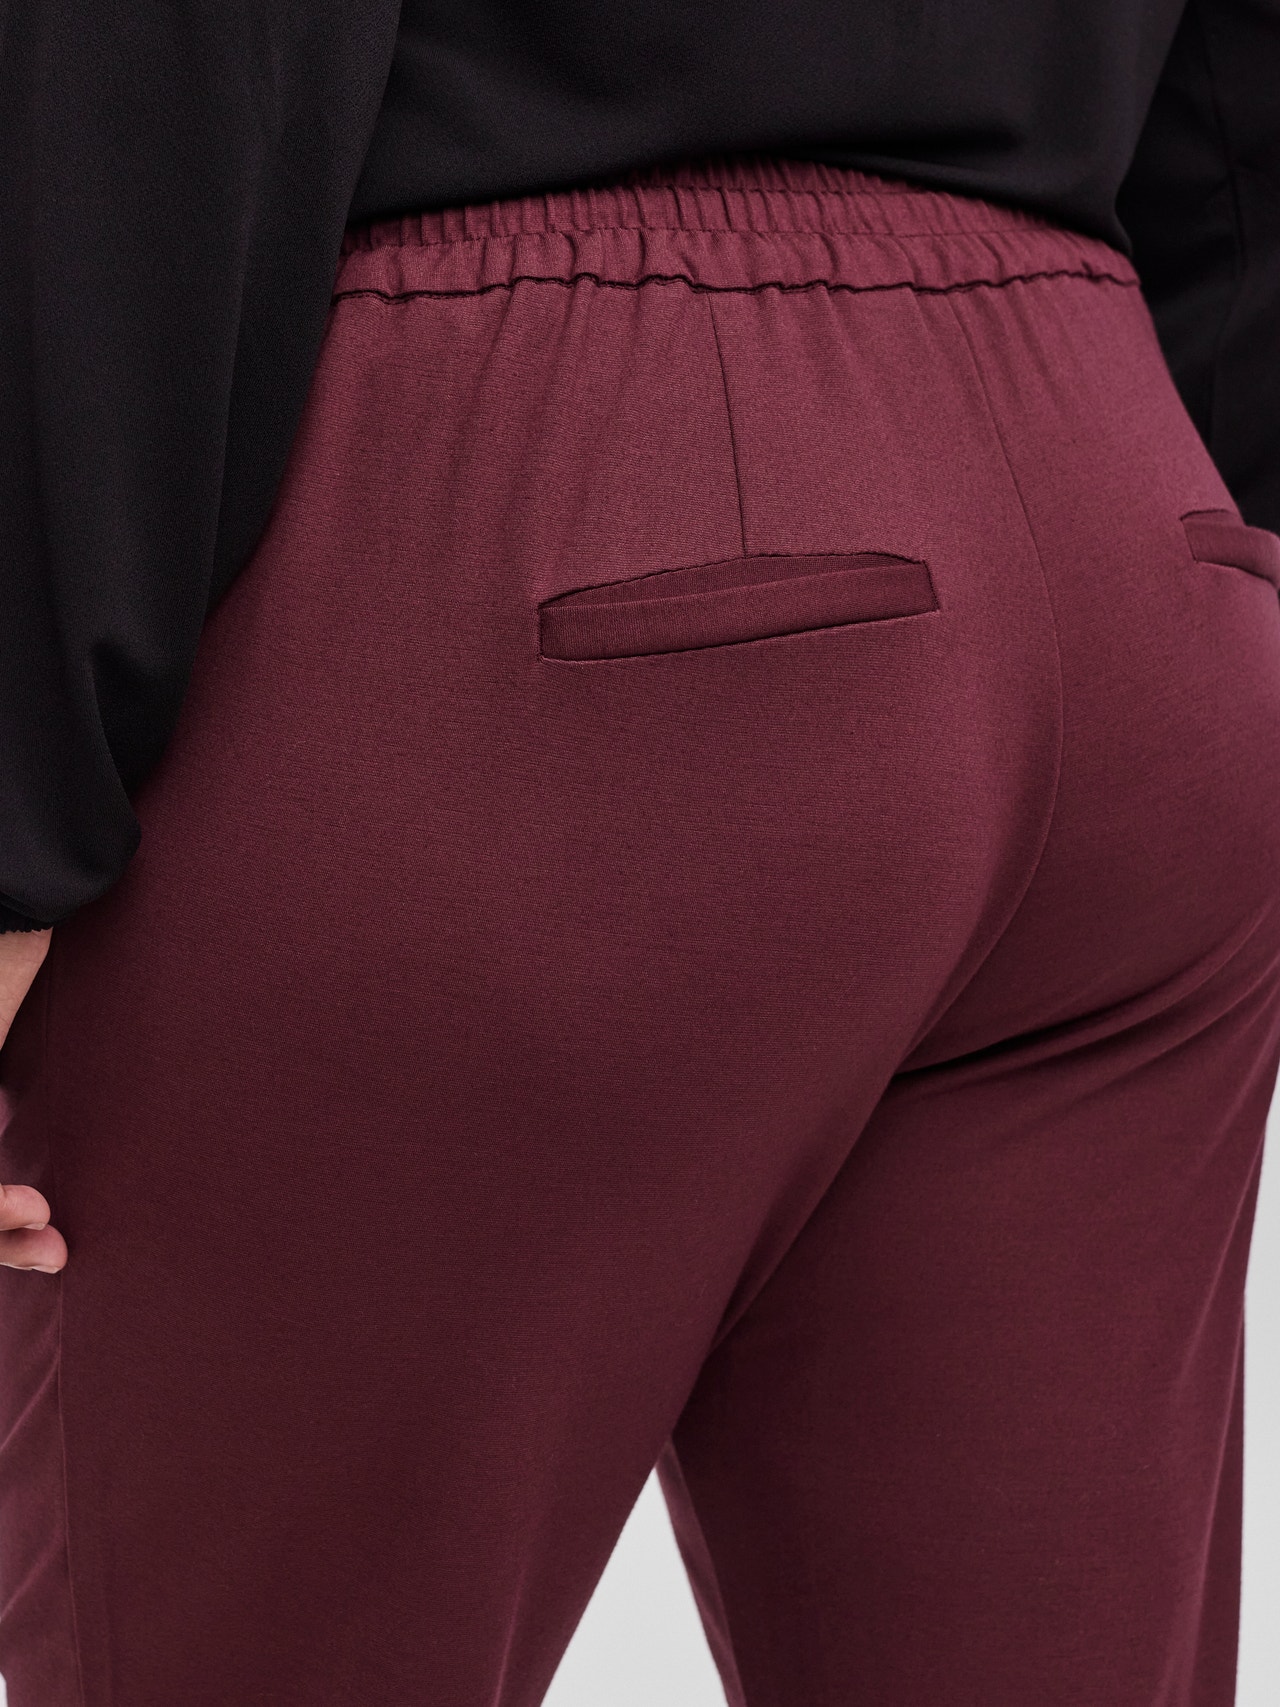 Vero Moda VMEVA Pantalons -Port Royale - 10209787